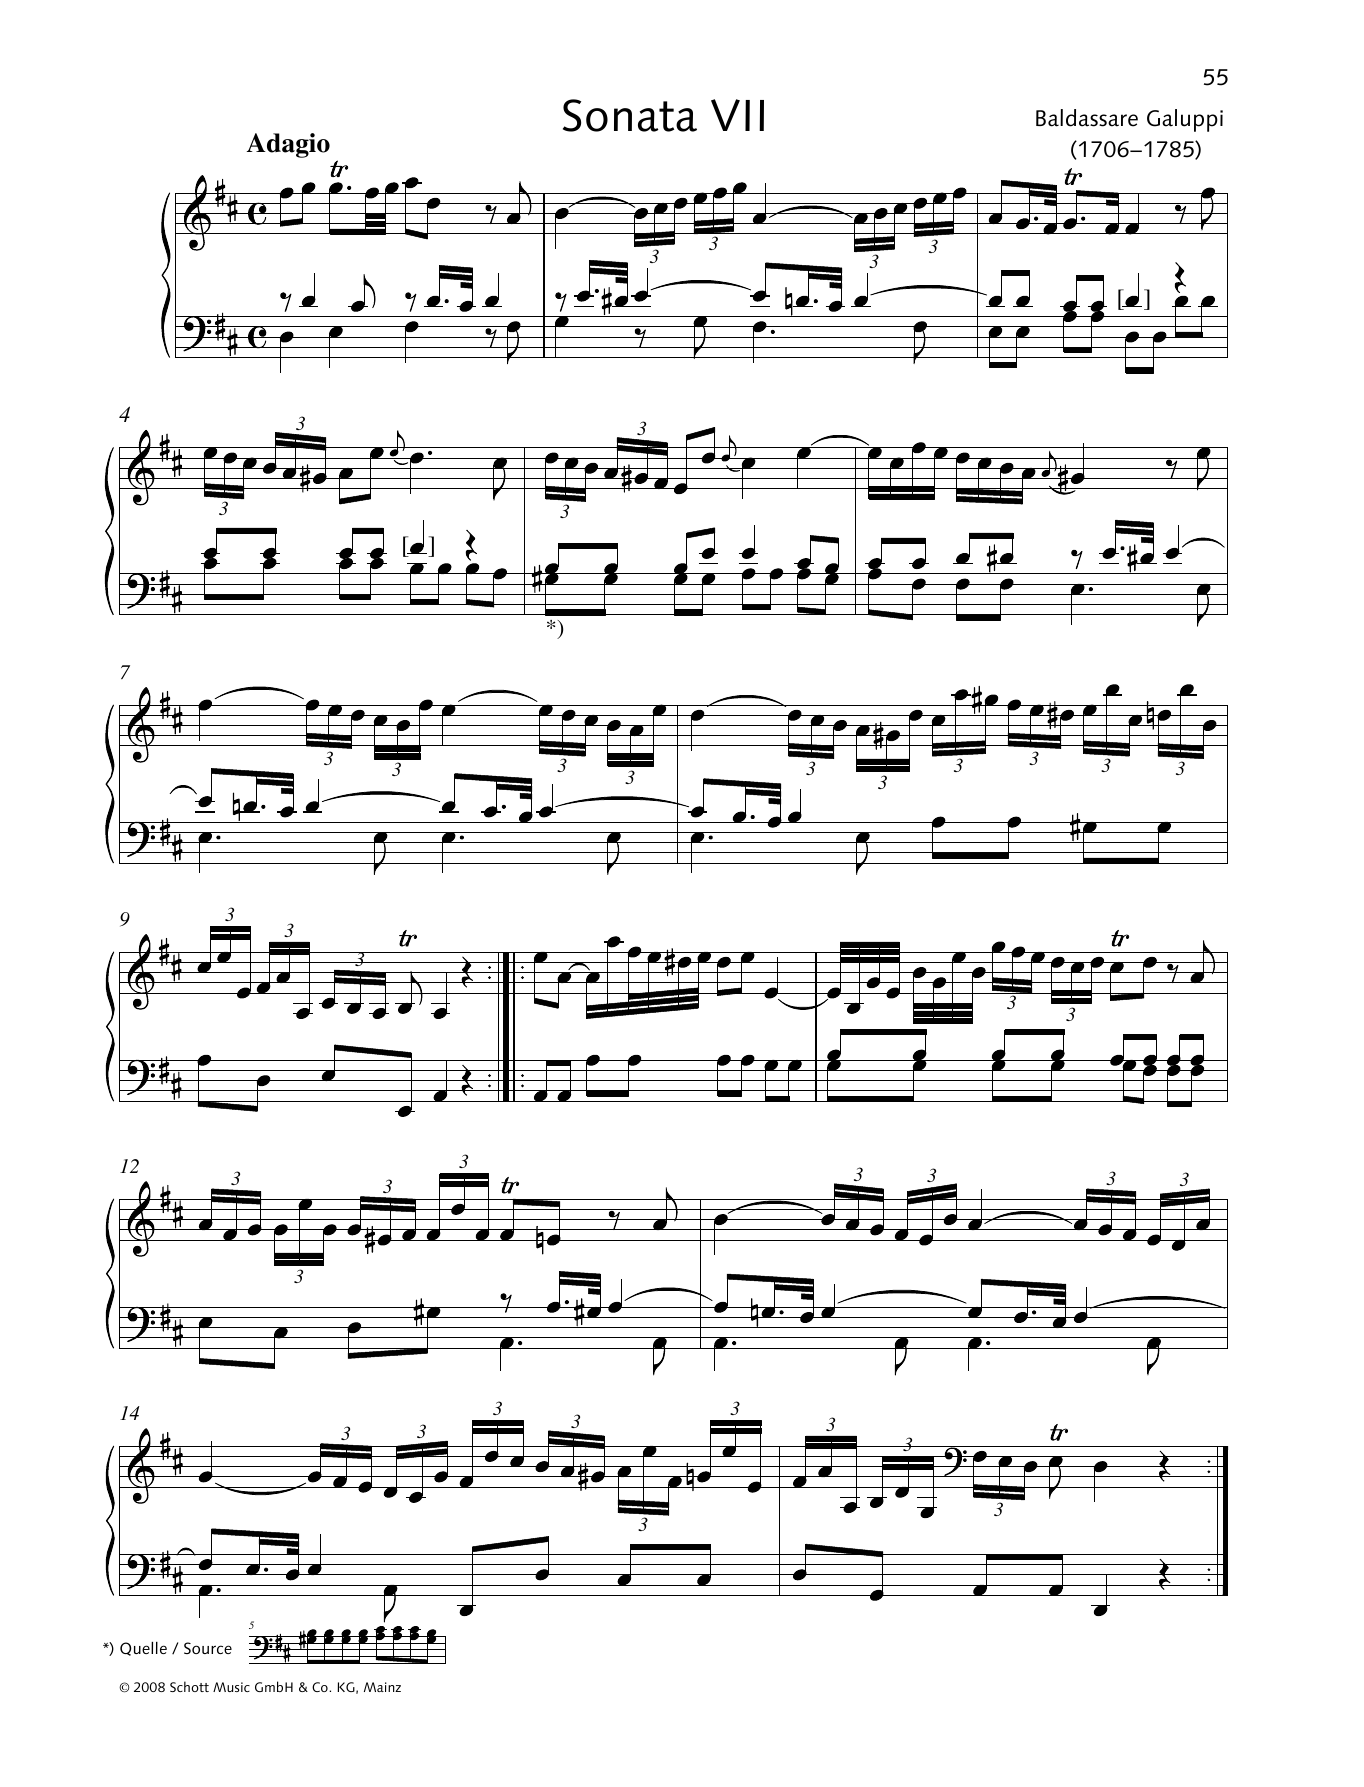 Baldassare Galuppi Sonata VII D major Sheet Music Notes & Chords for Piano Solo - Download or Print PDF